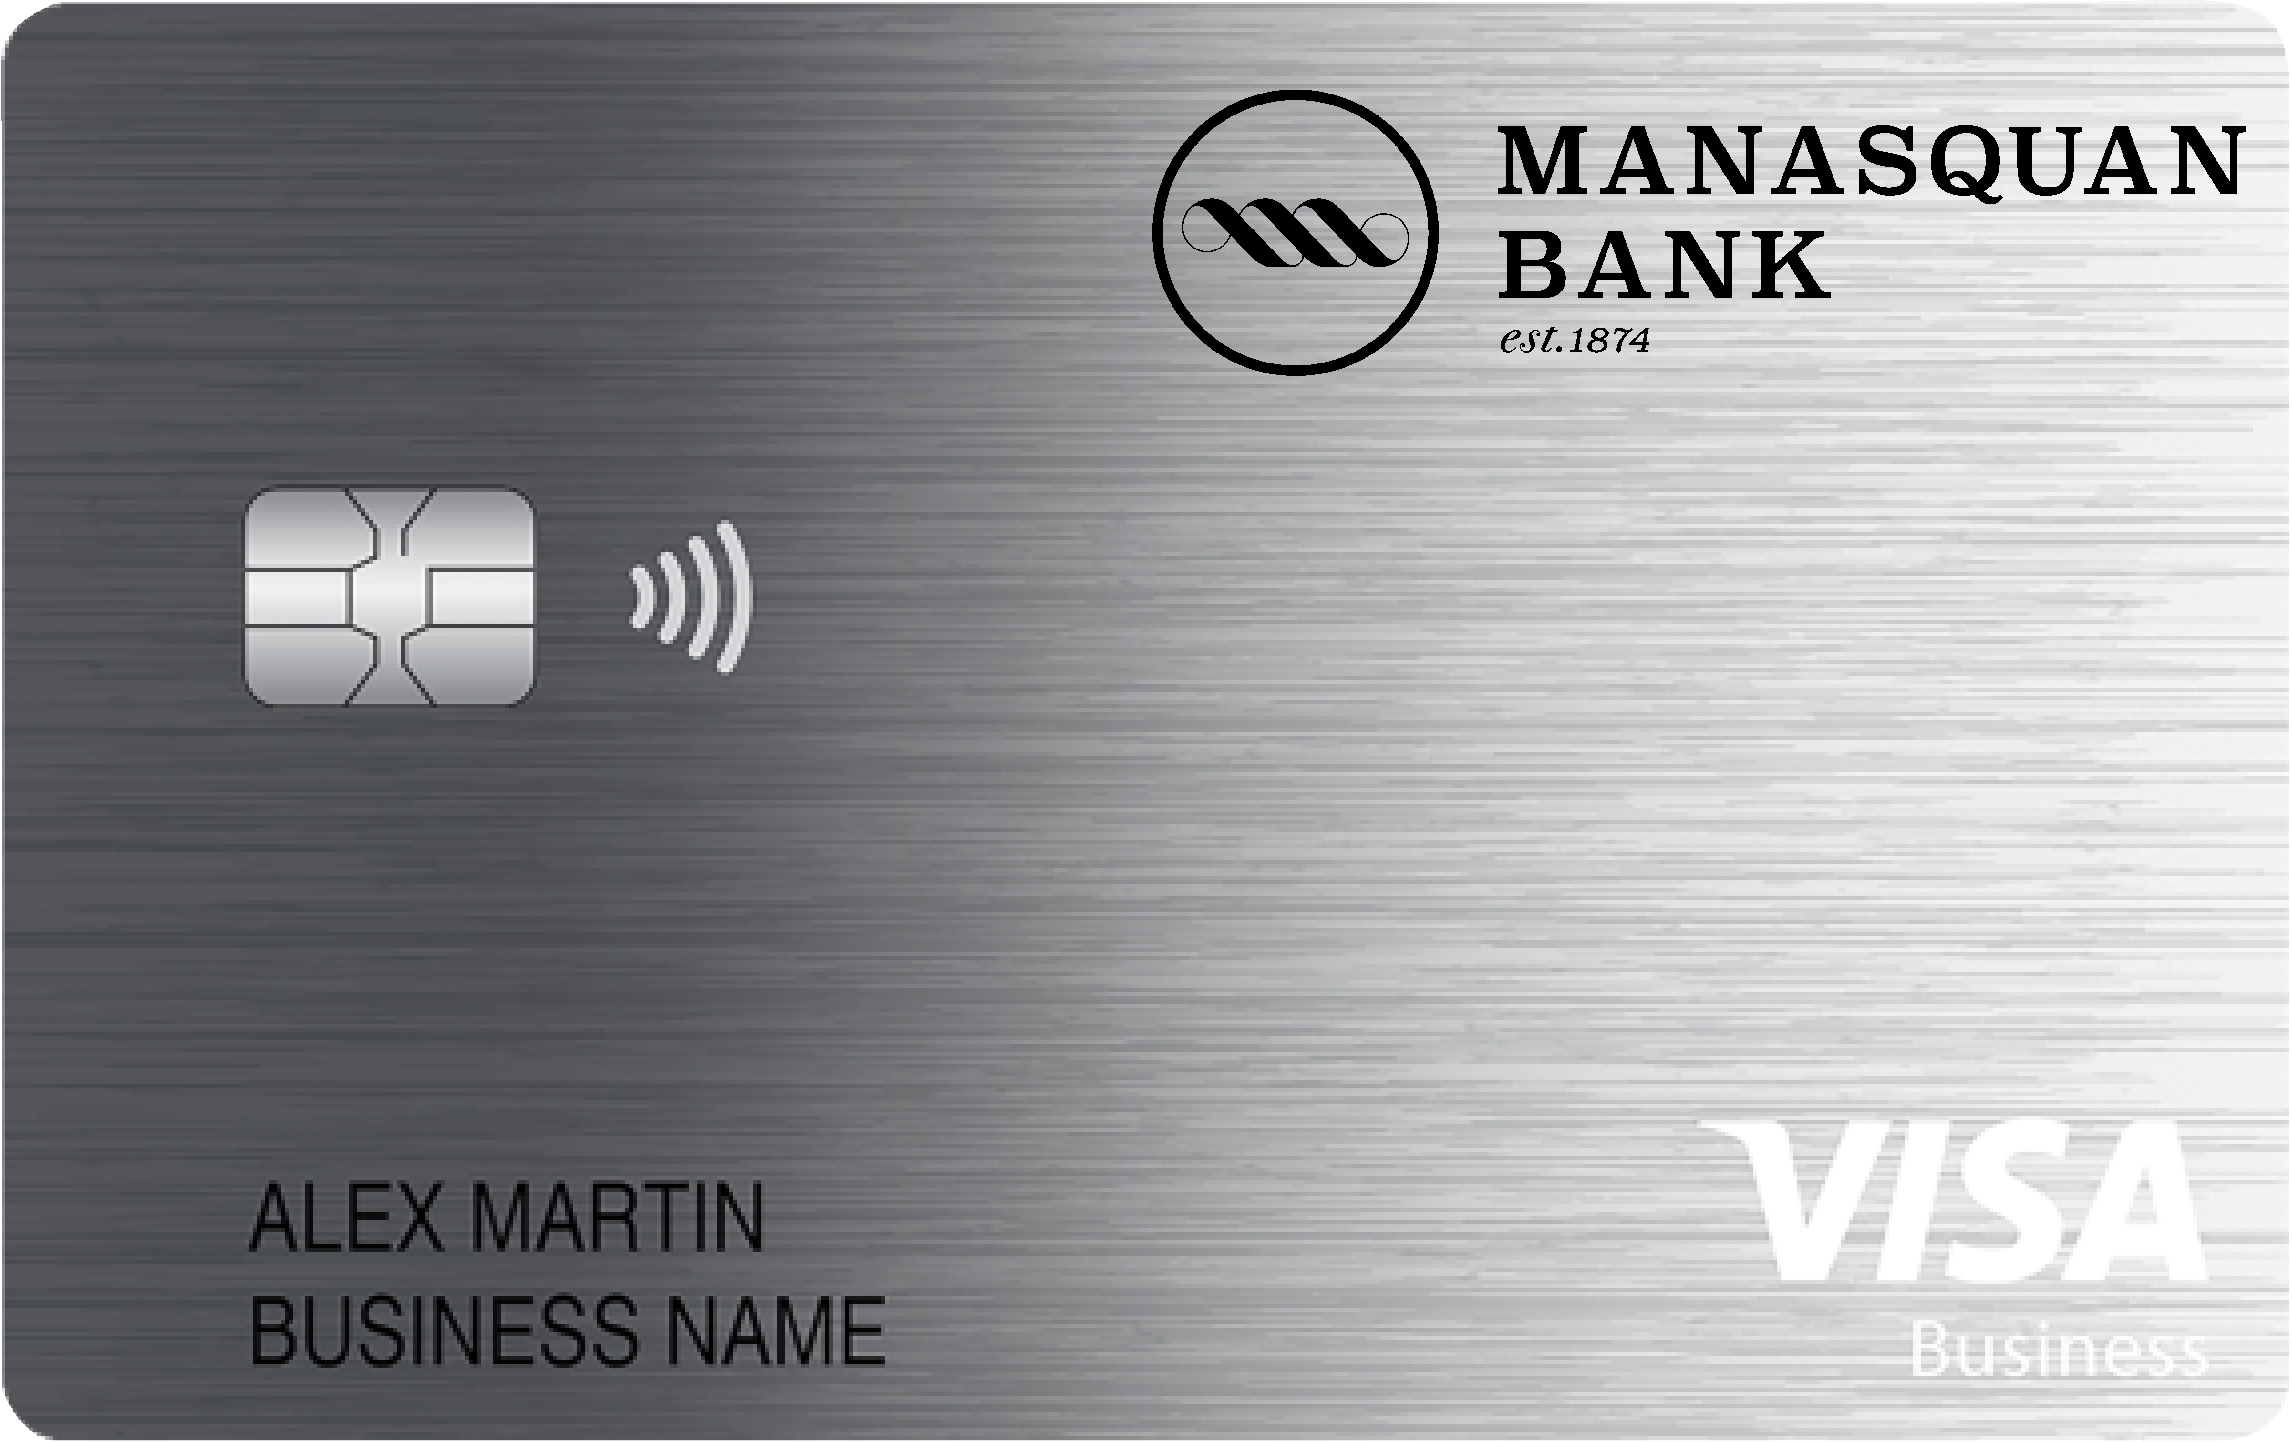 Manasquan Bank Business Cash Preferred Card